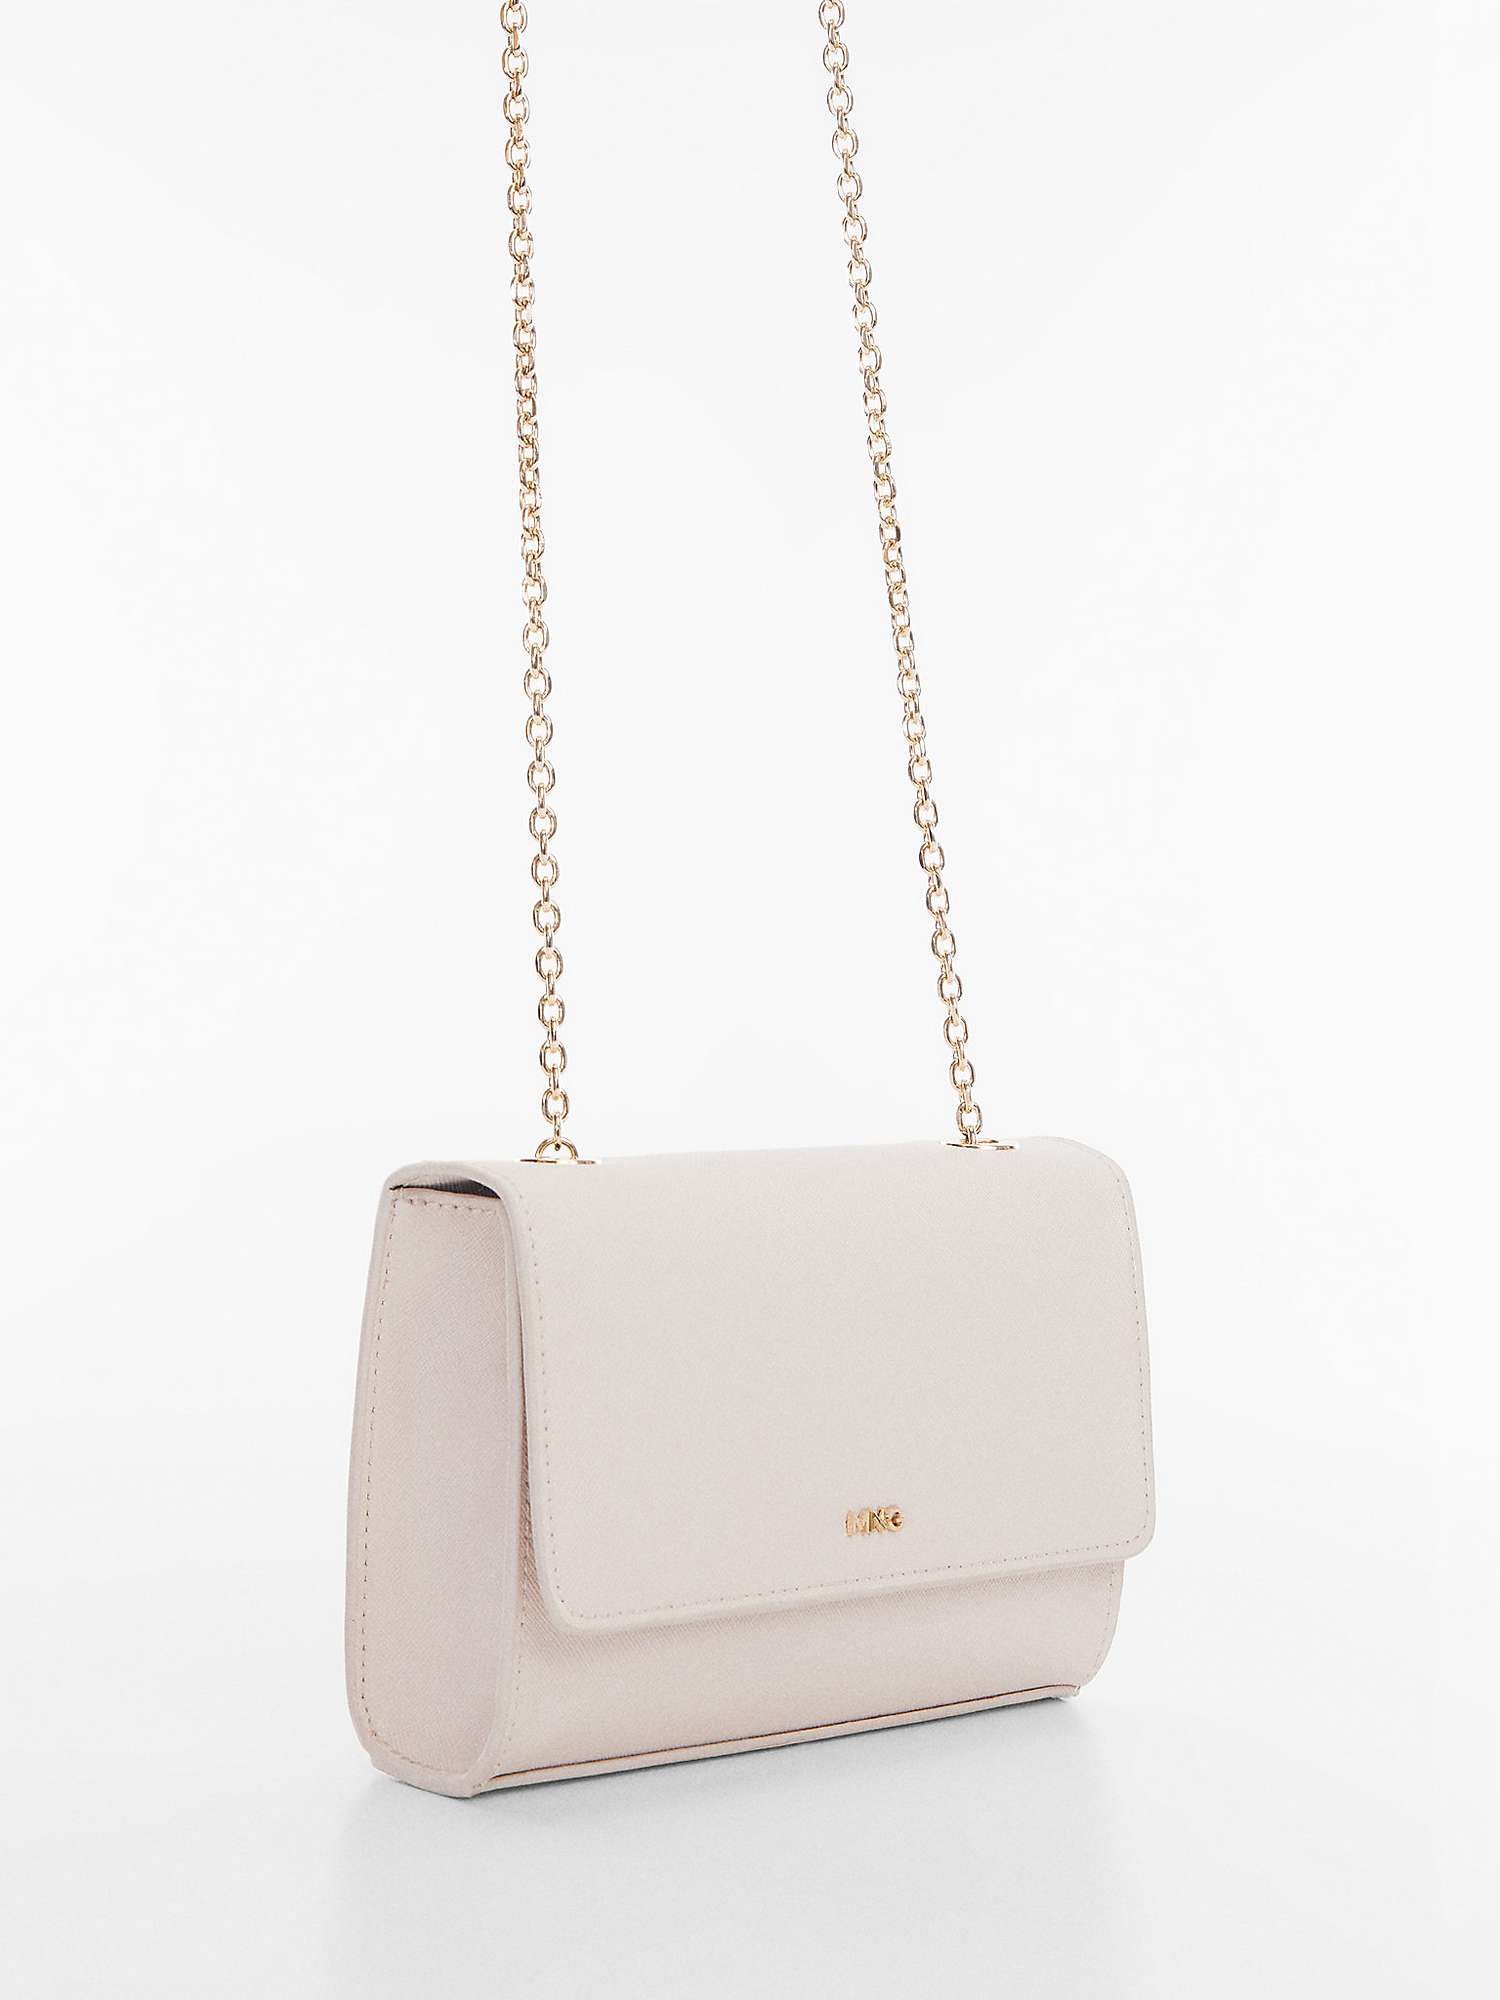 Buy Mango Coro Saffiano Effect Chain Strap Clutch Bag, Light Pink Online at johnlewis.com